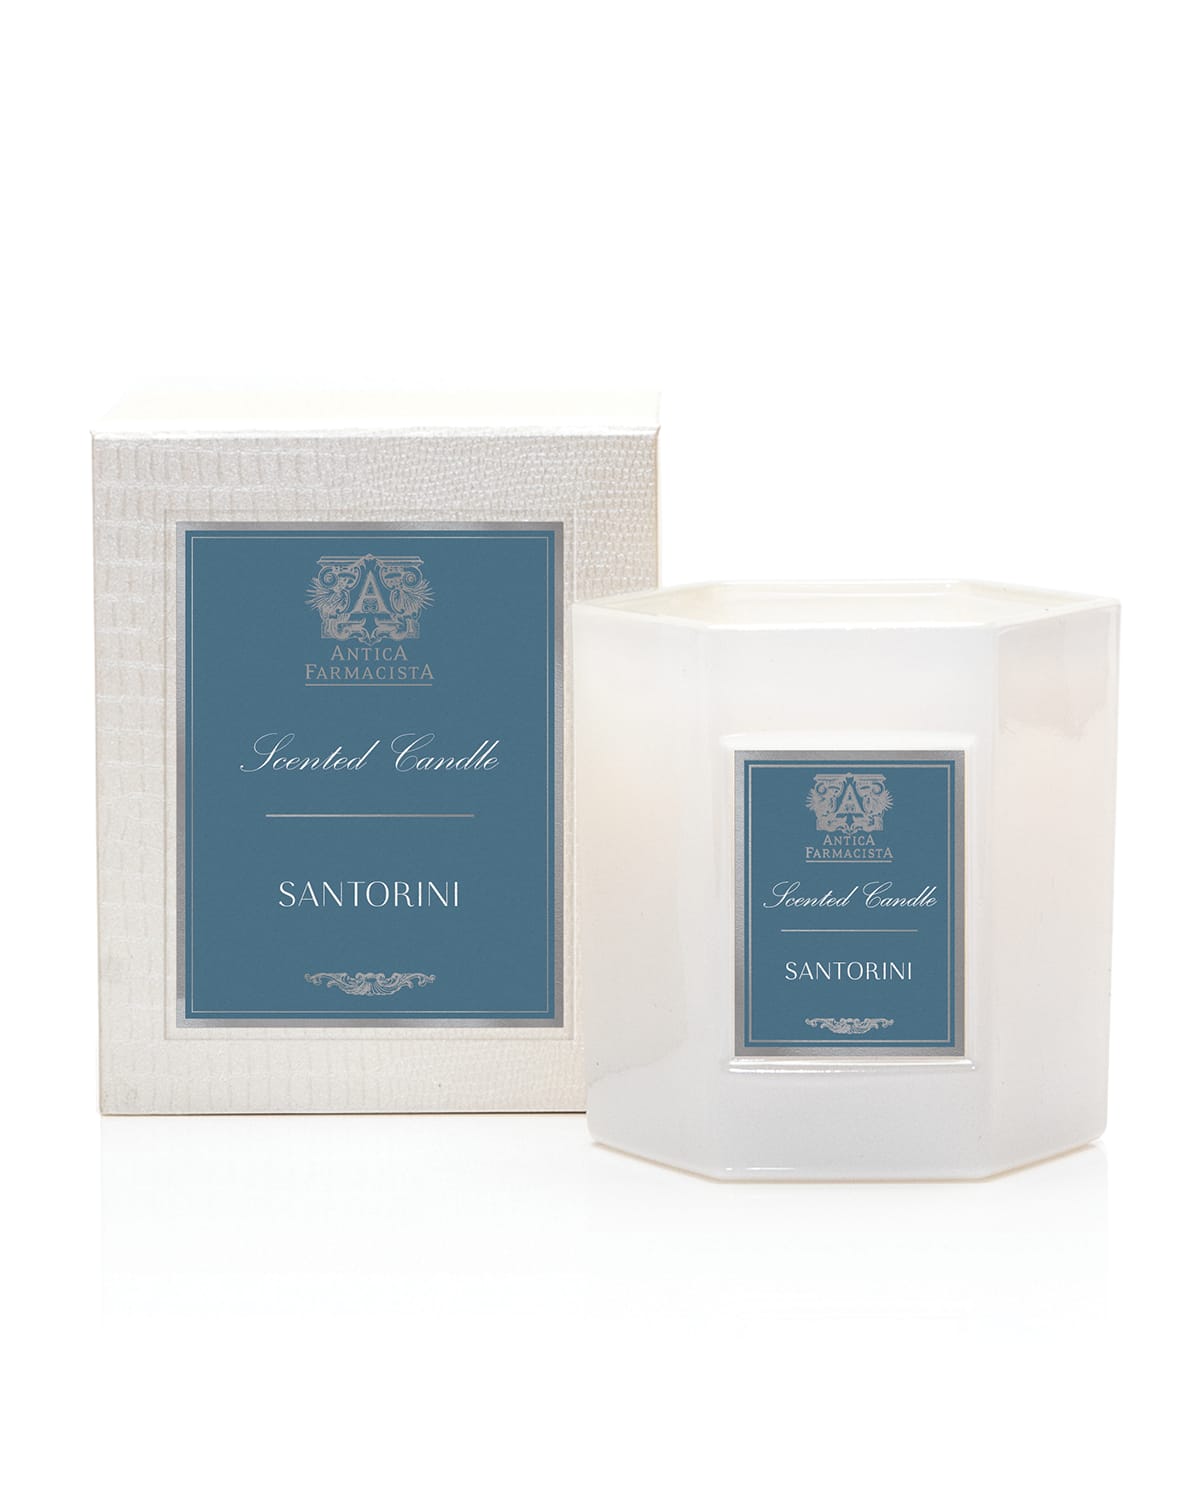 Santorini Candle, 9 oz.